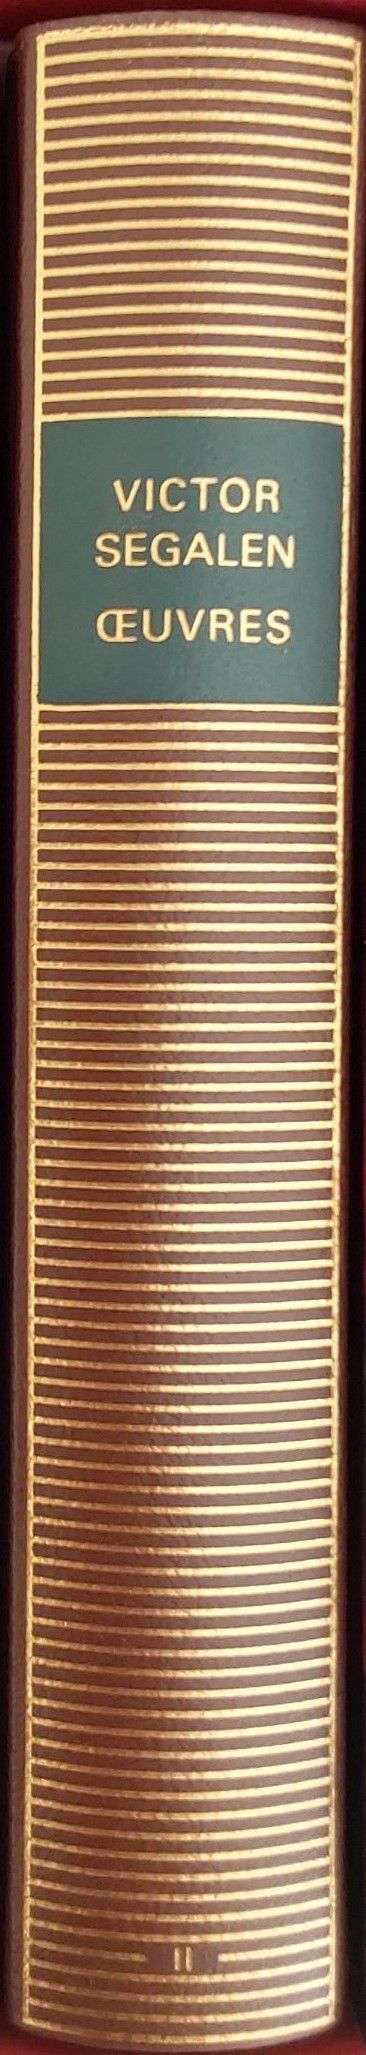 Volume 654 de Victor Segalen dans la Bibliothèque de la Pléiade.